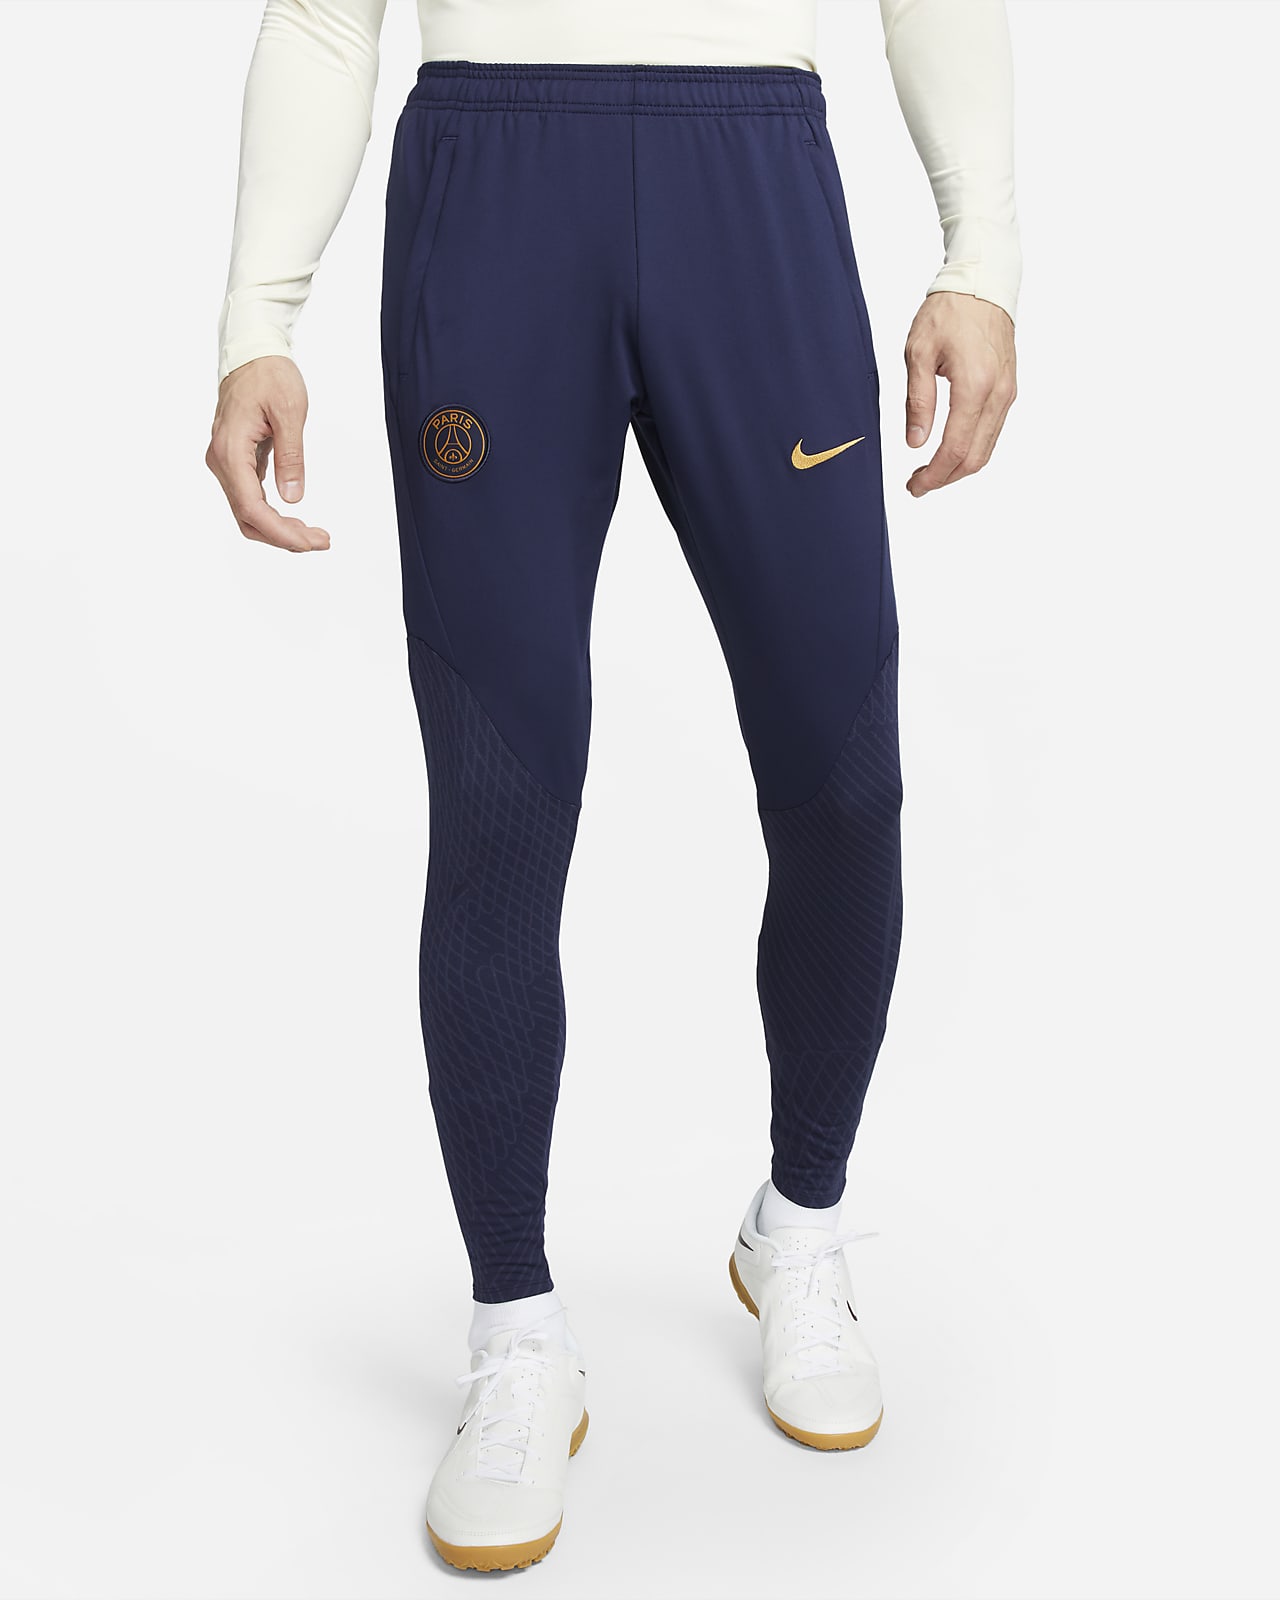 Netherlands Strike Men's Nike Dri-FIT Soccer Pants.